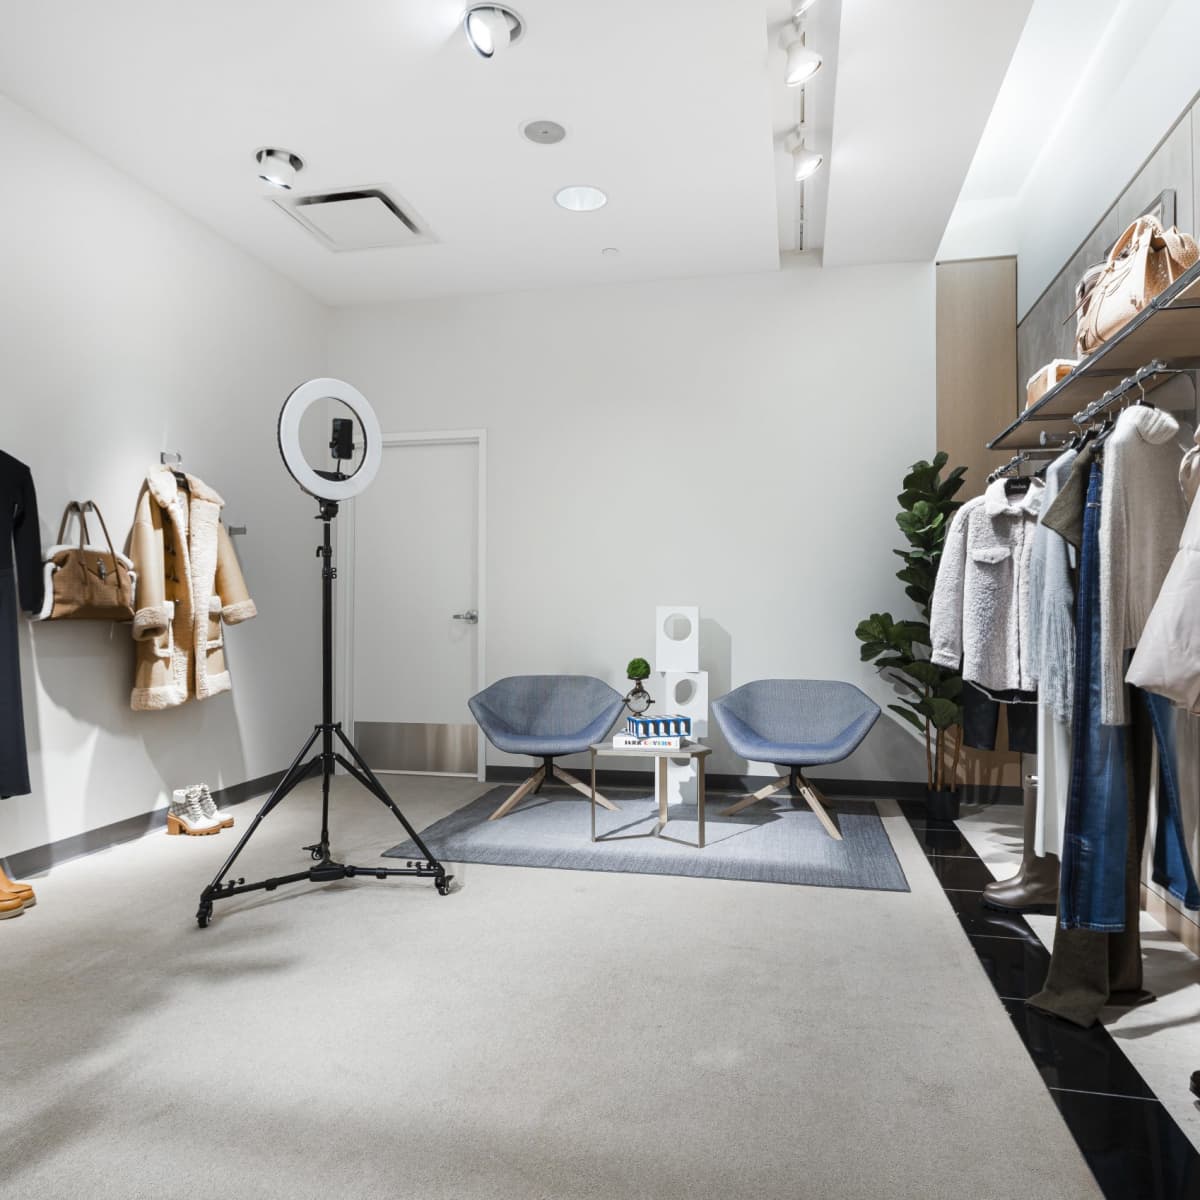 Neiman Marcus Fashion Island Debuts Digital Style Labs 